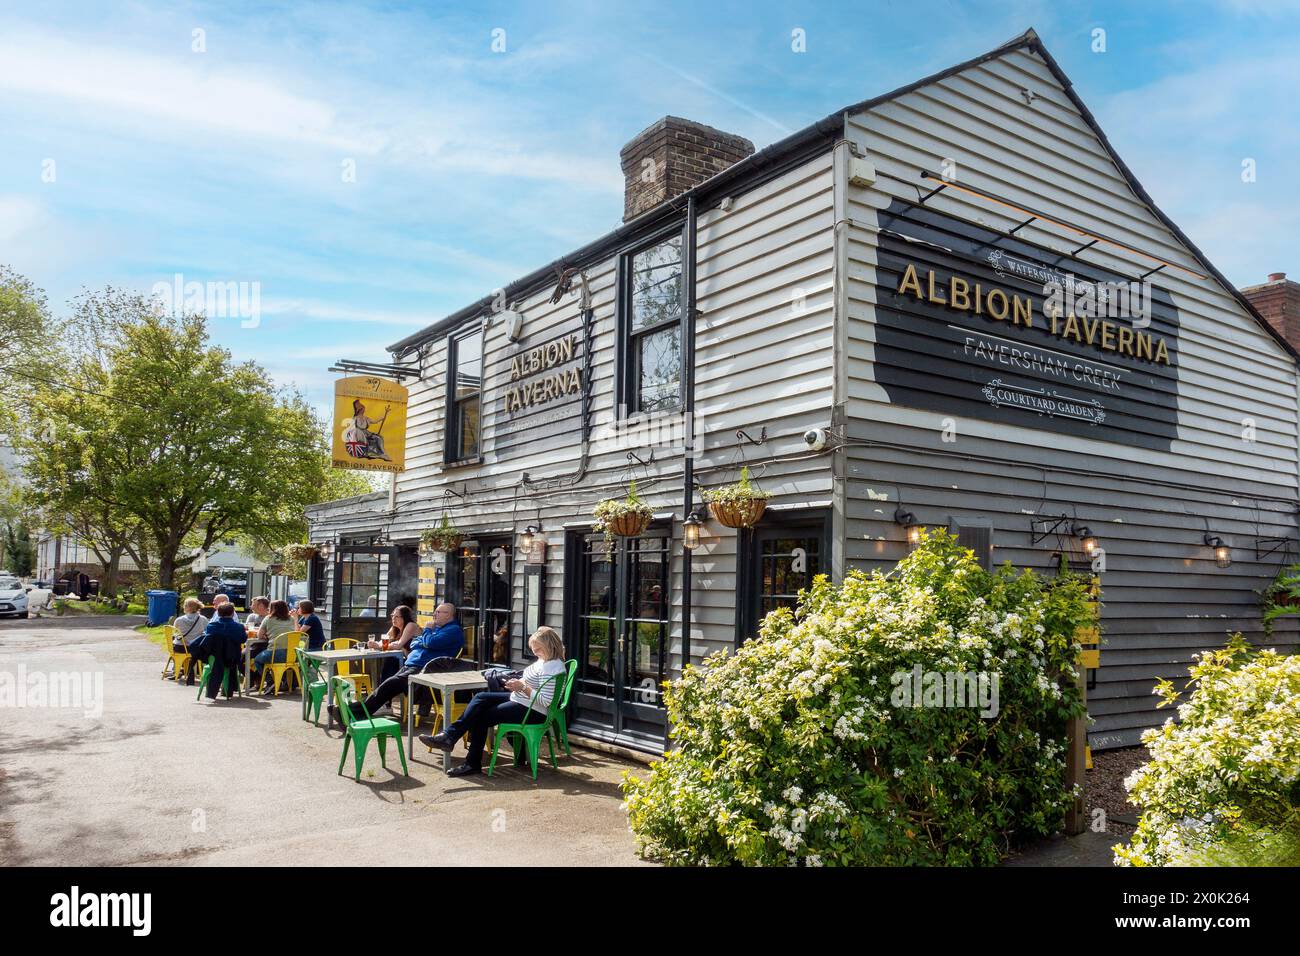 Albion Taverna,Pub,Inn,Shepherd Neame,29 Front Brents,Faversham Creek,Faversham,Kent,England Stock Photo